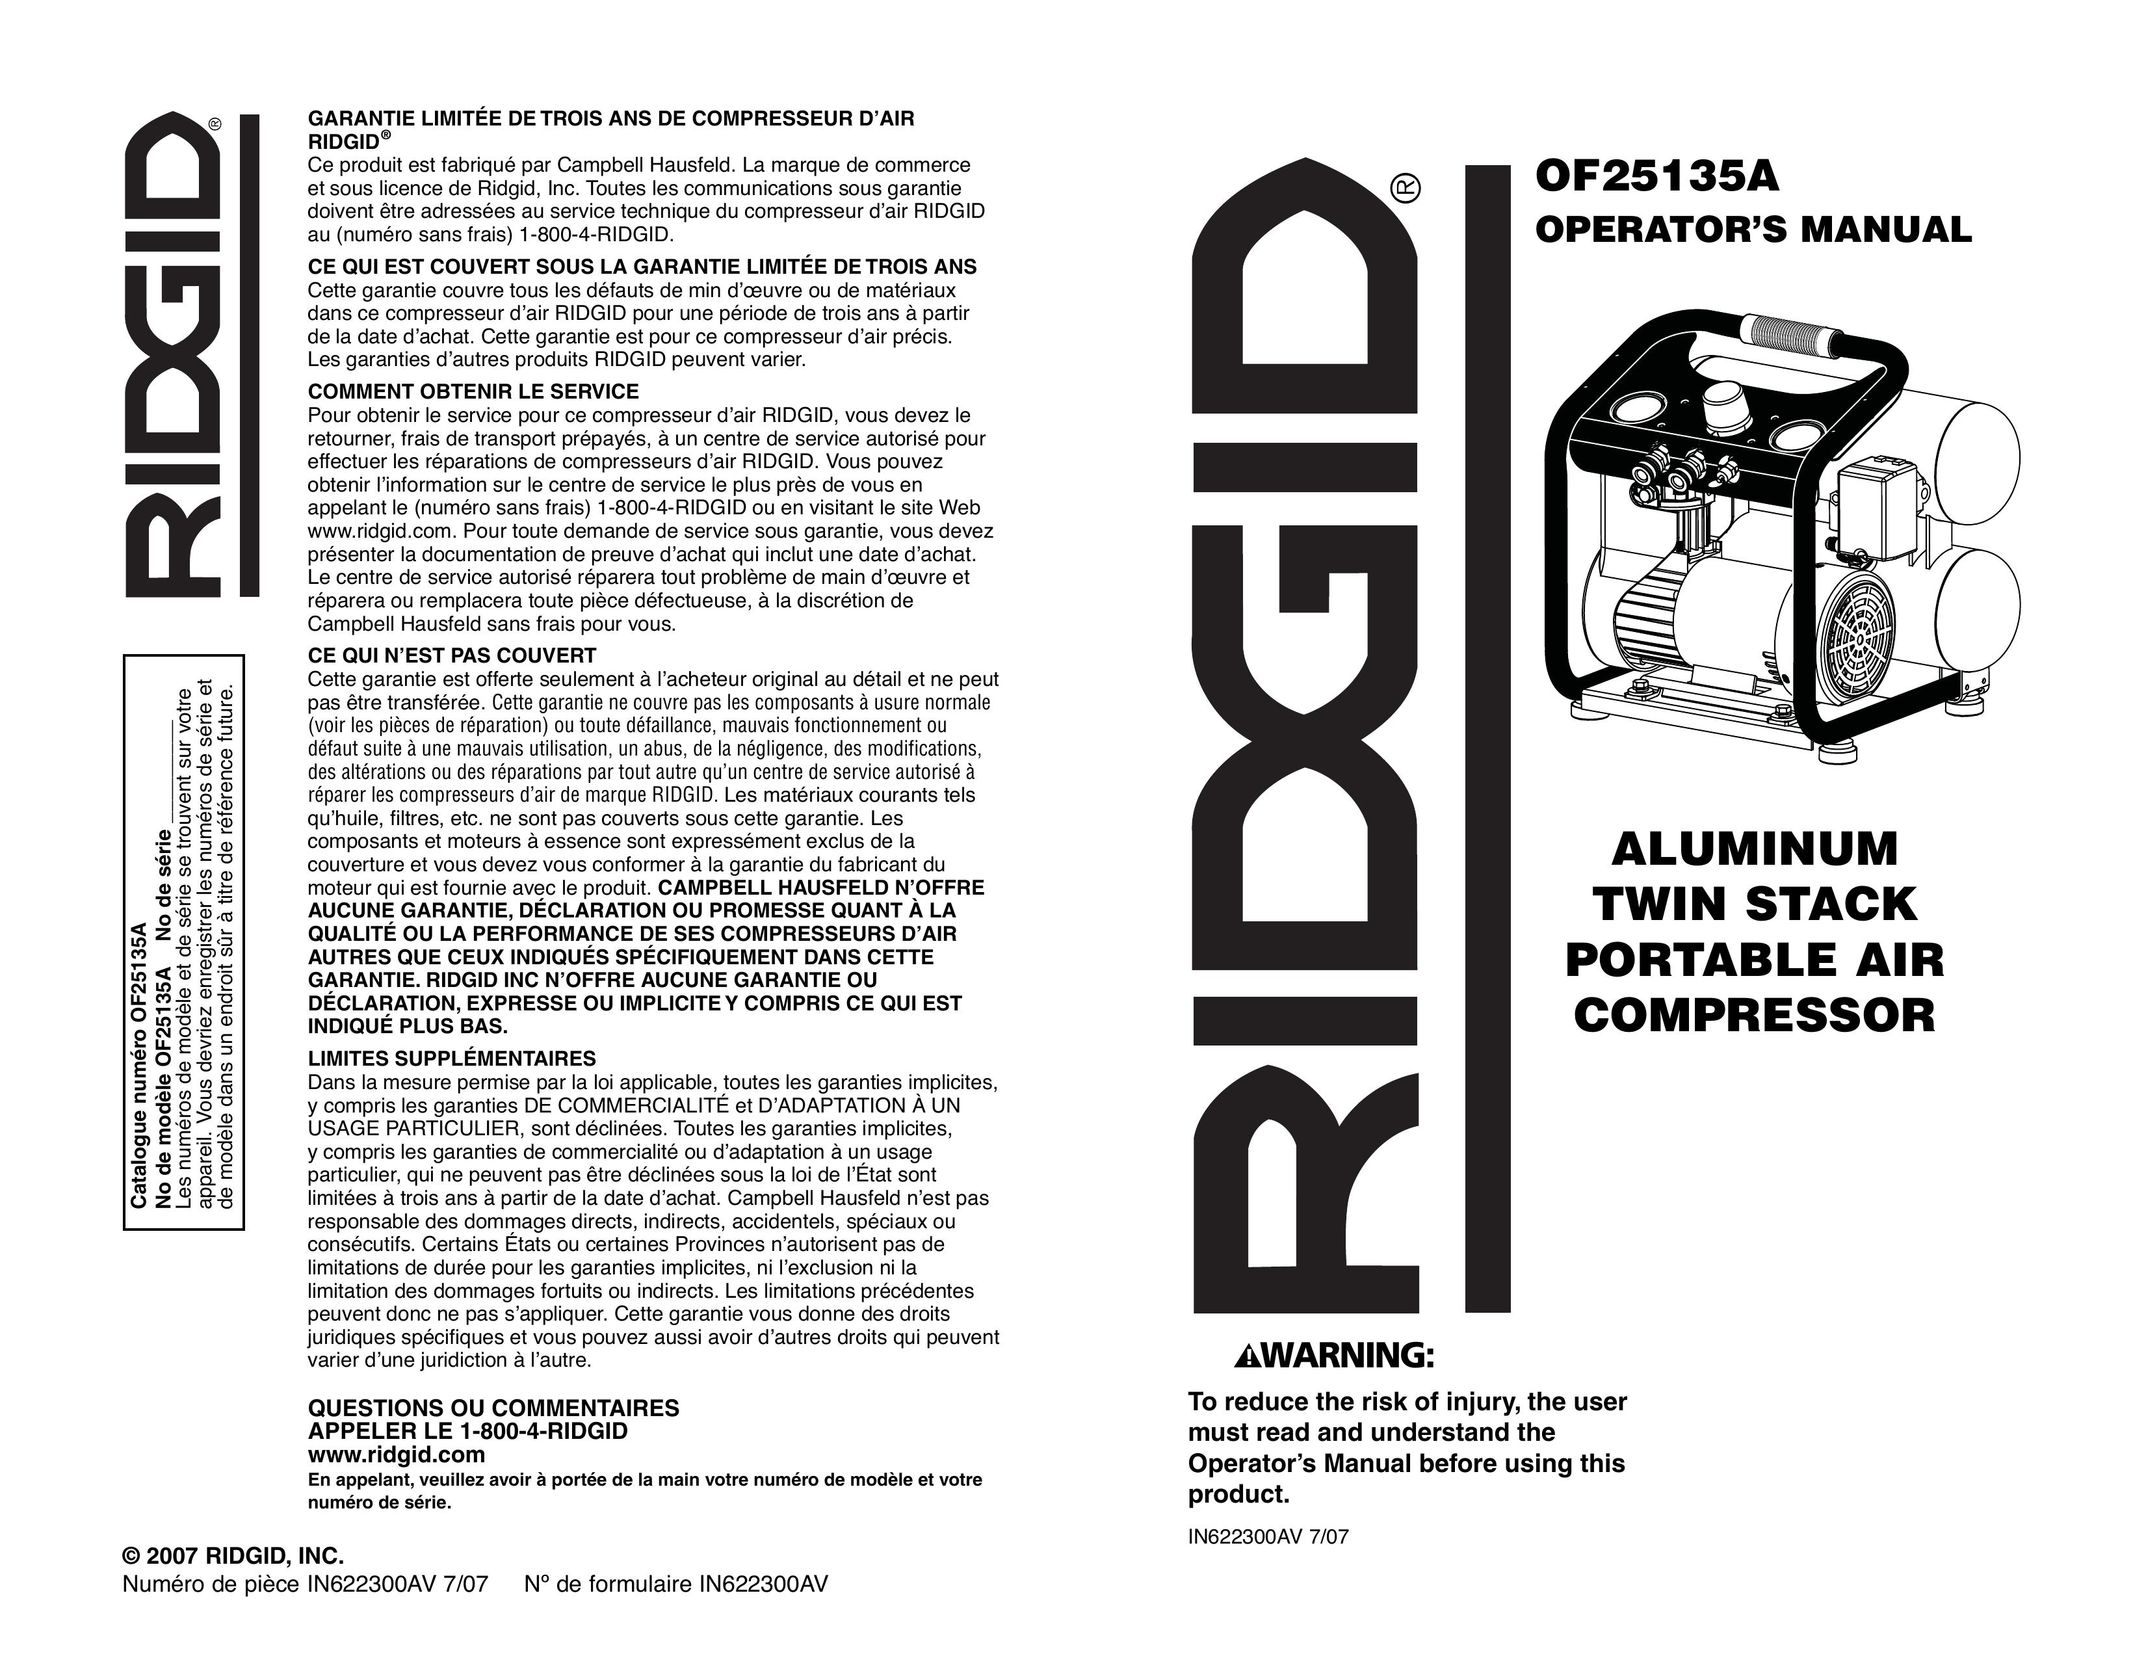 RIDGID OF25135A Air Compressor User Manual